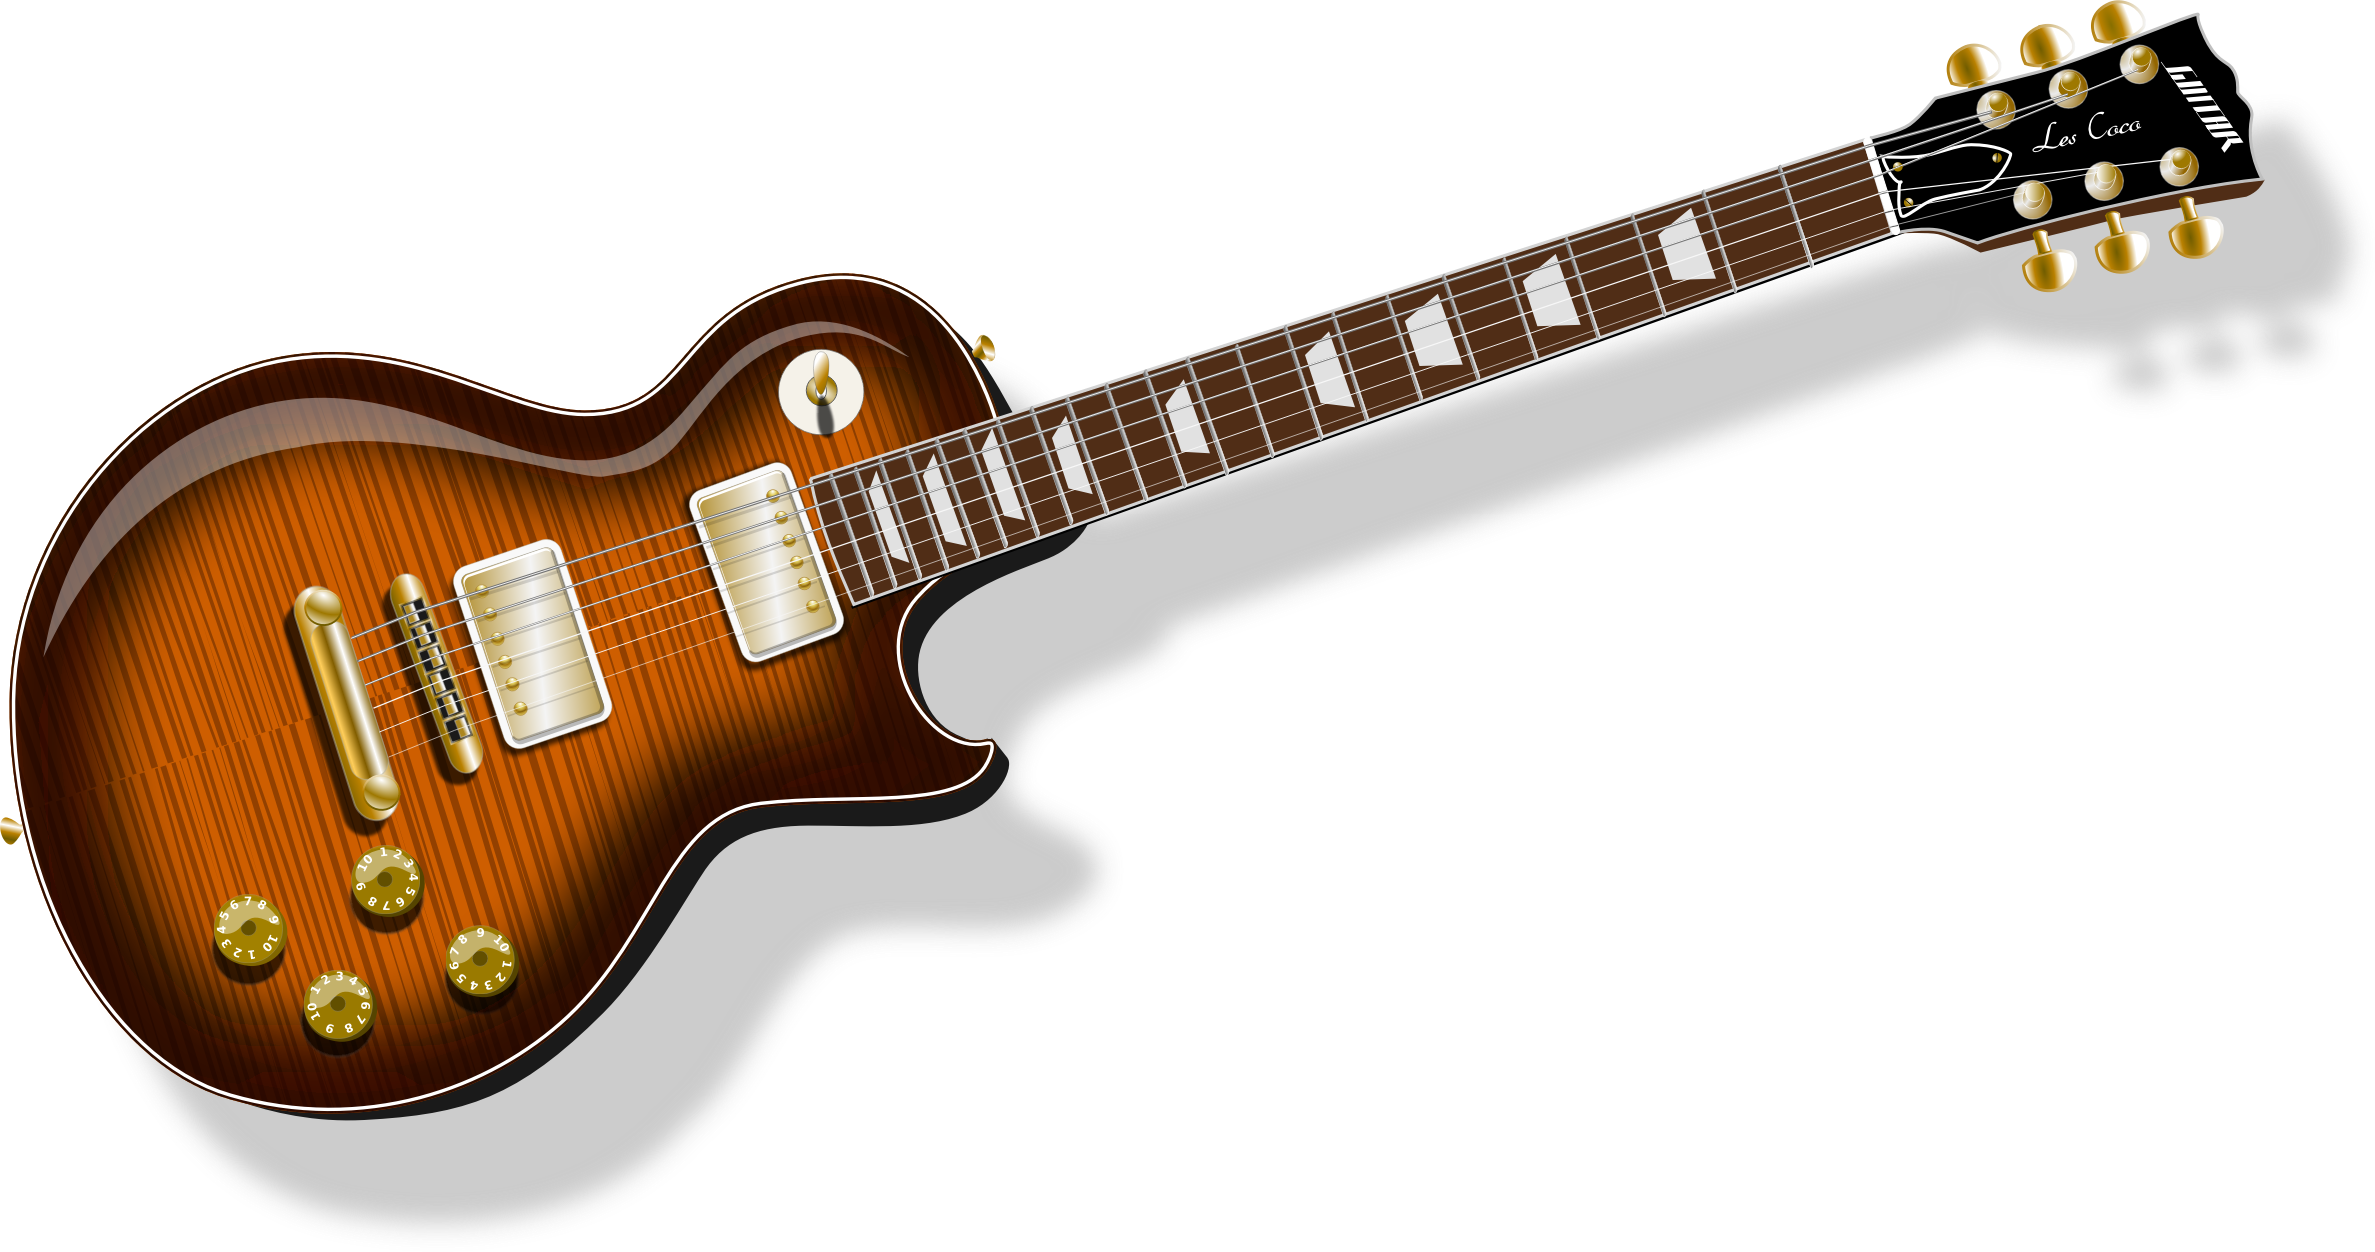 Rock Guitar PNG Image Background